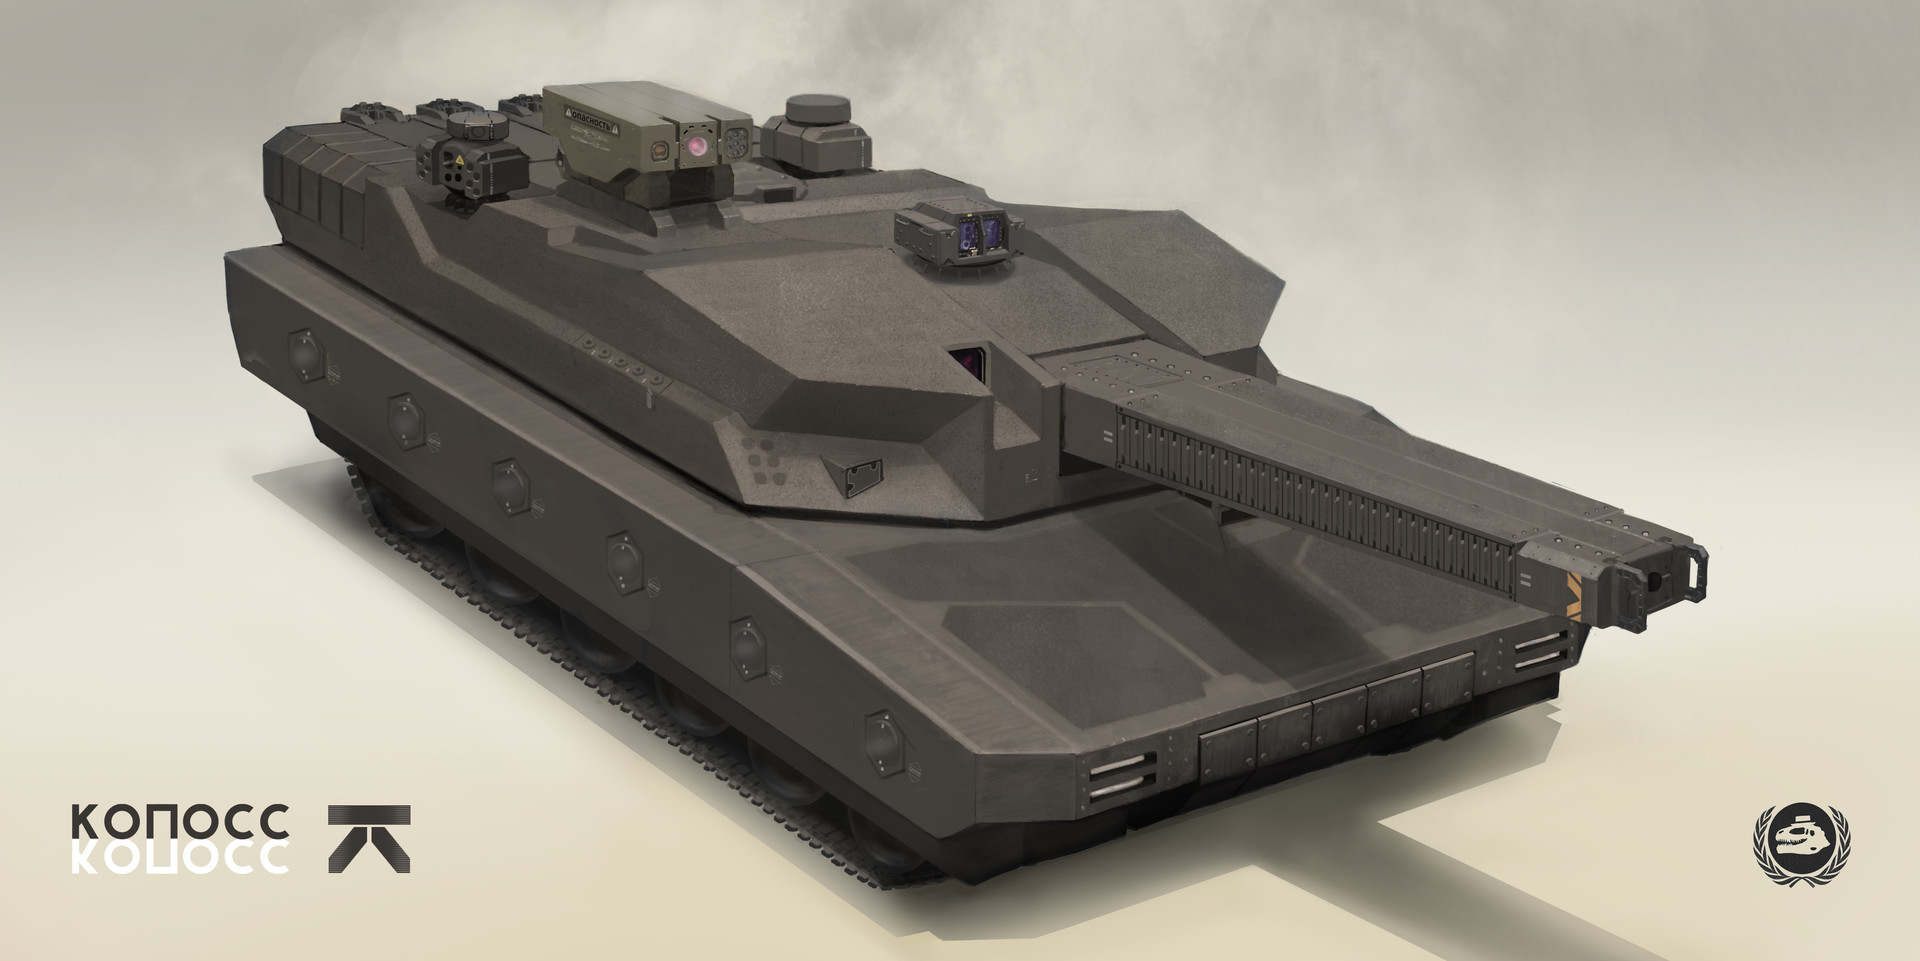 future main battle tank designs